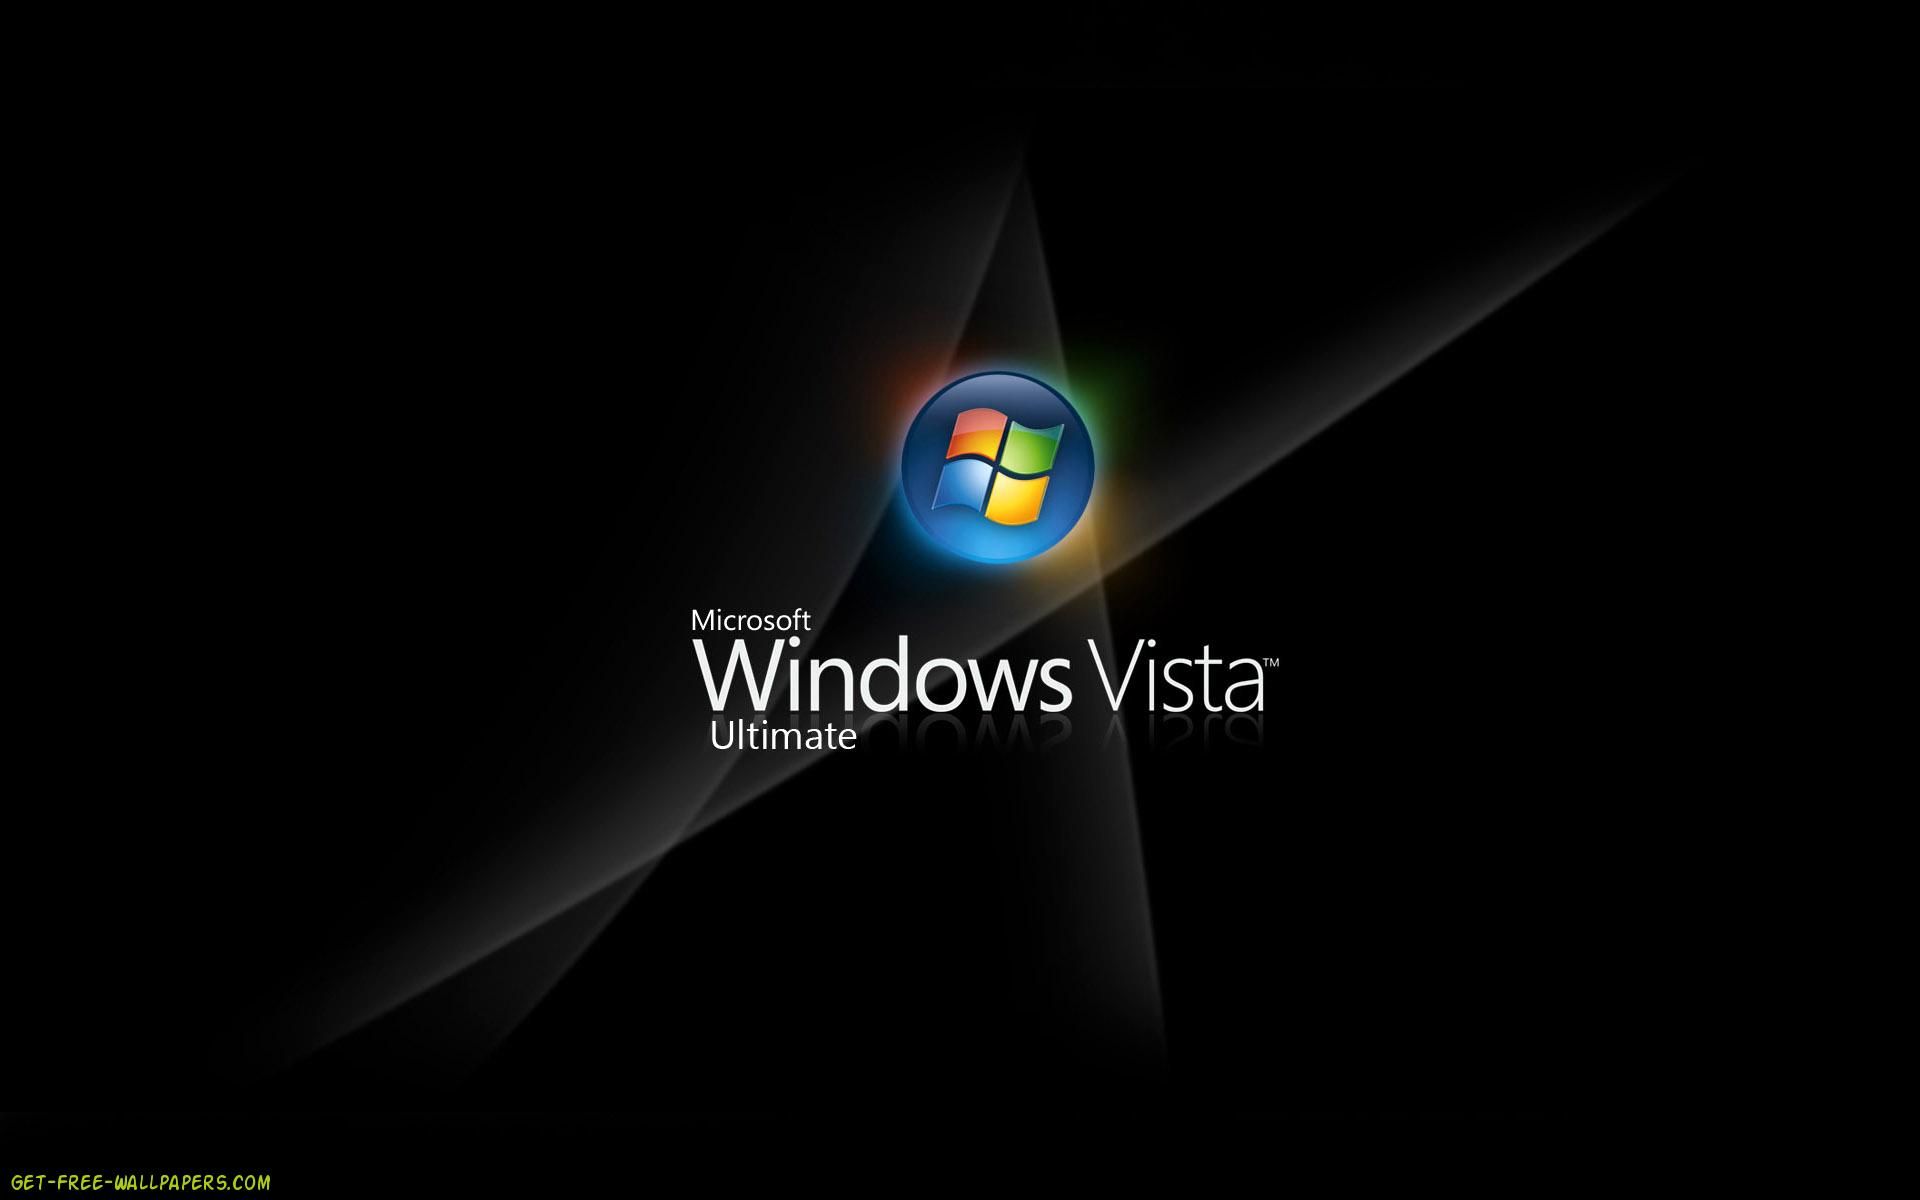  Windows Vista Hintergrundbild 1920x1200. Windows Vista Ultimate Wallpaper